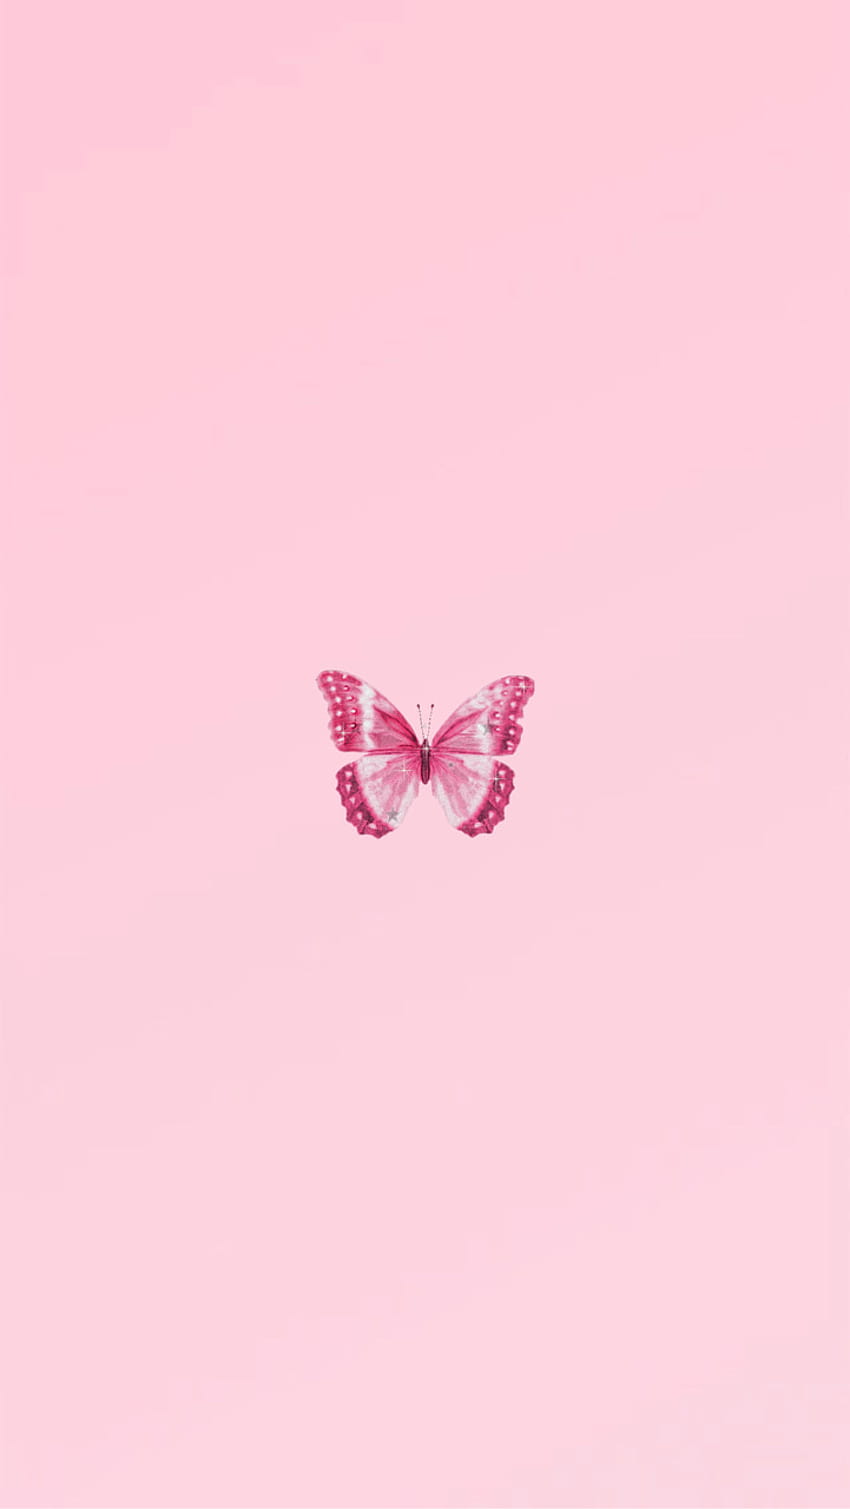 Butterfly in 2020, cute butterfly baby pink HD phone wallpaper